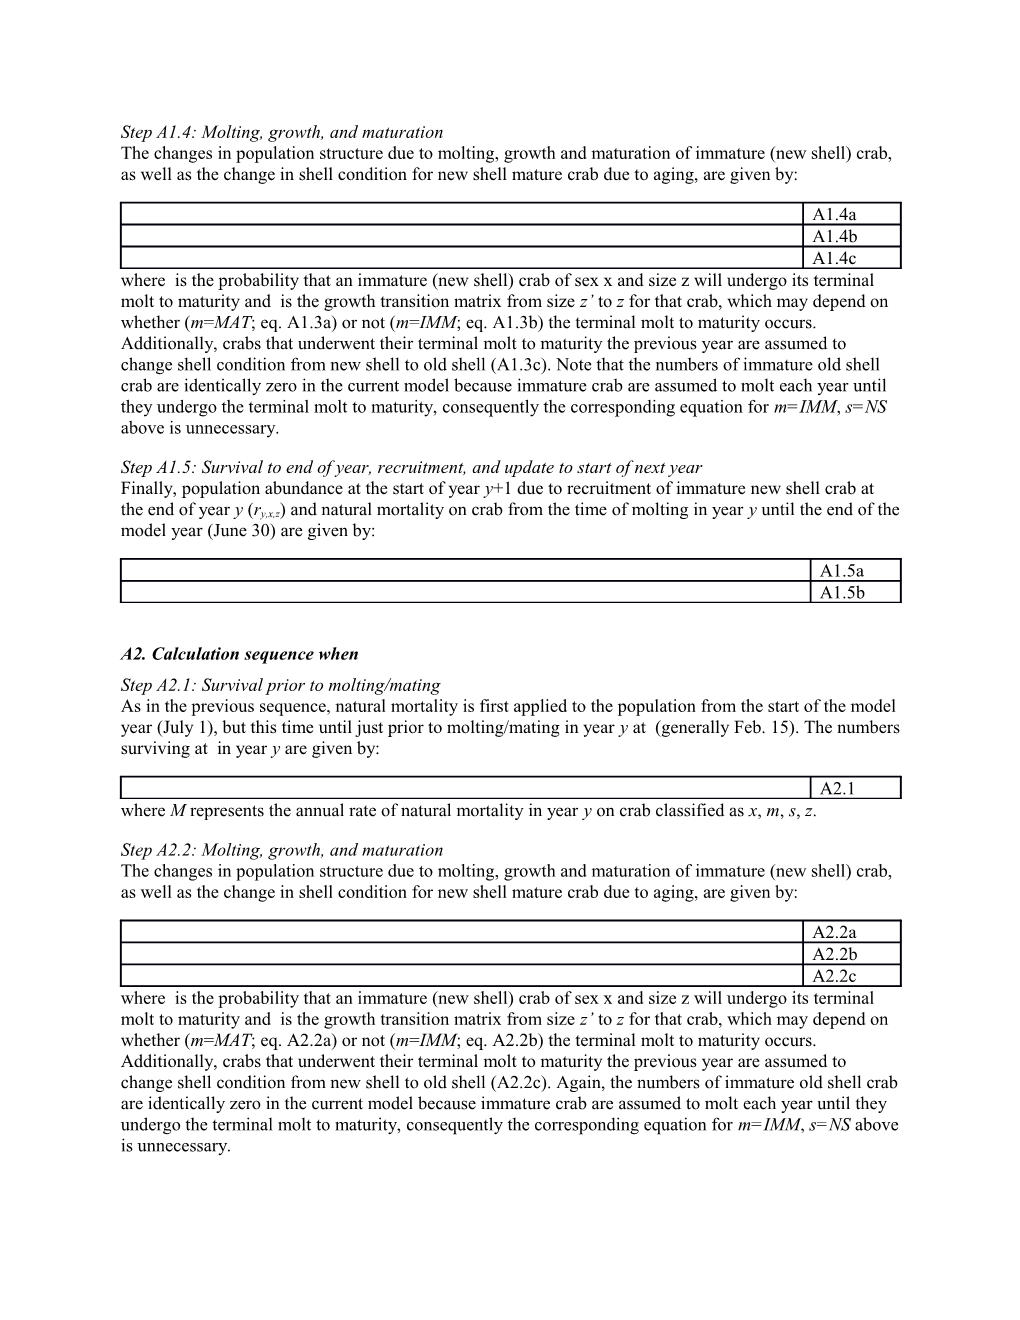 Appendix 3: TCSAM (Tanner Crab Stock Assessment Model) 2014 Description